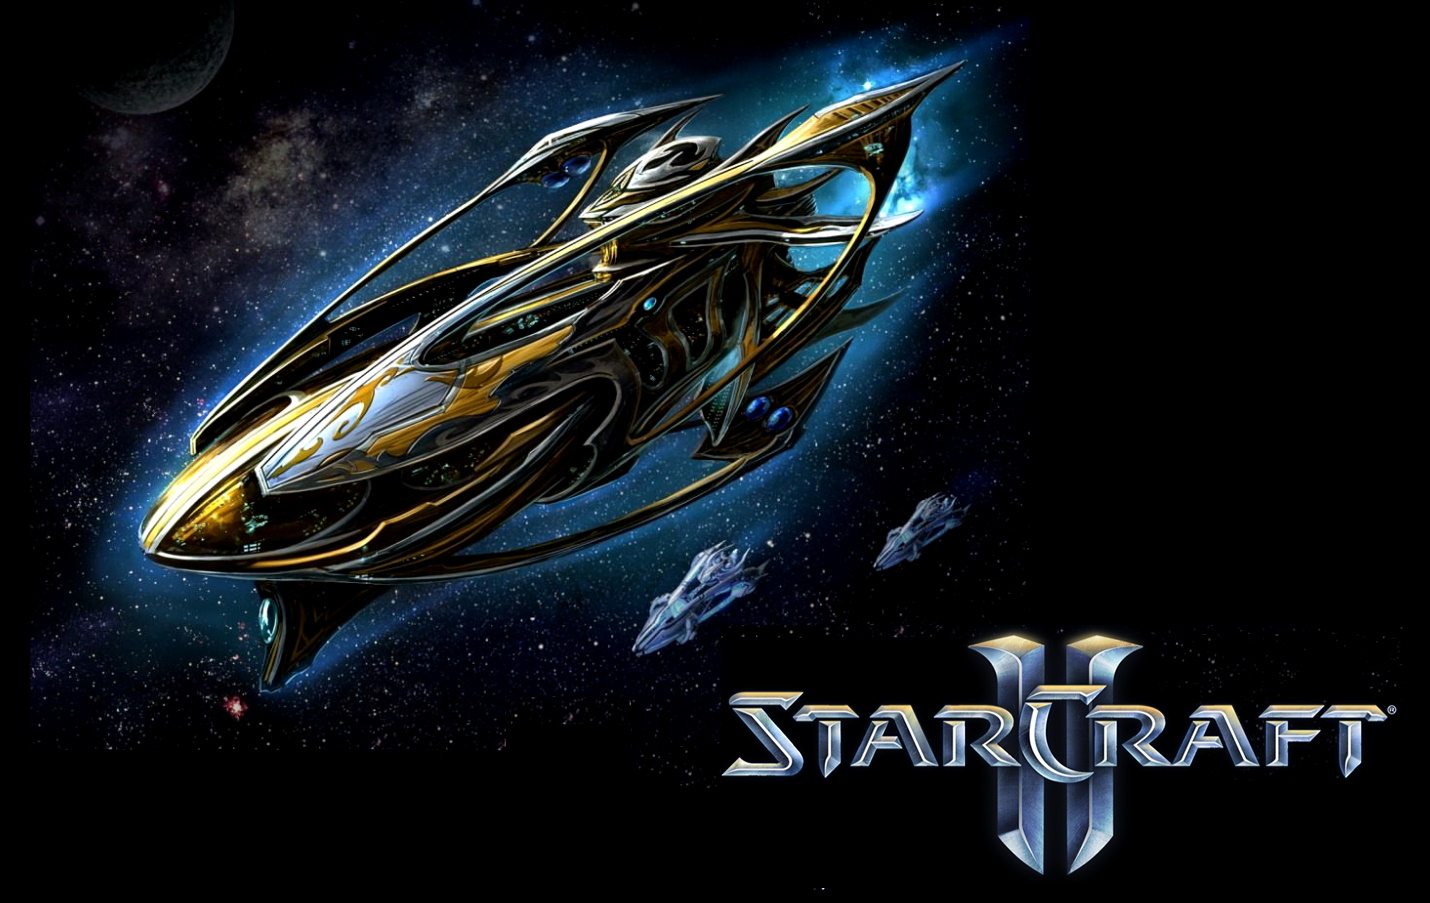 StarCraft 2 Every Day